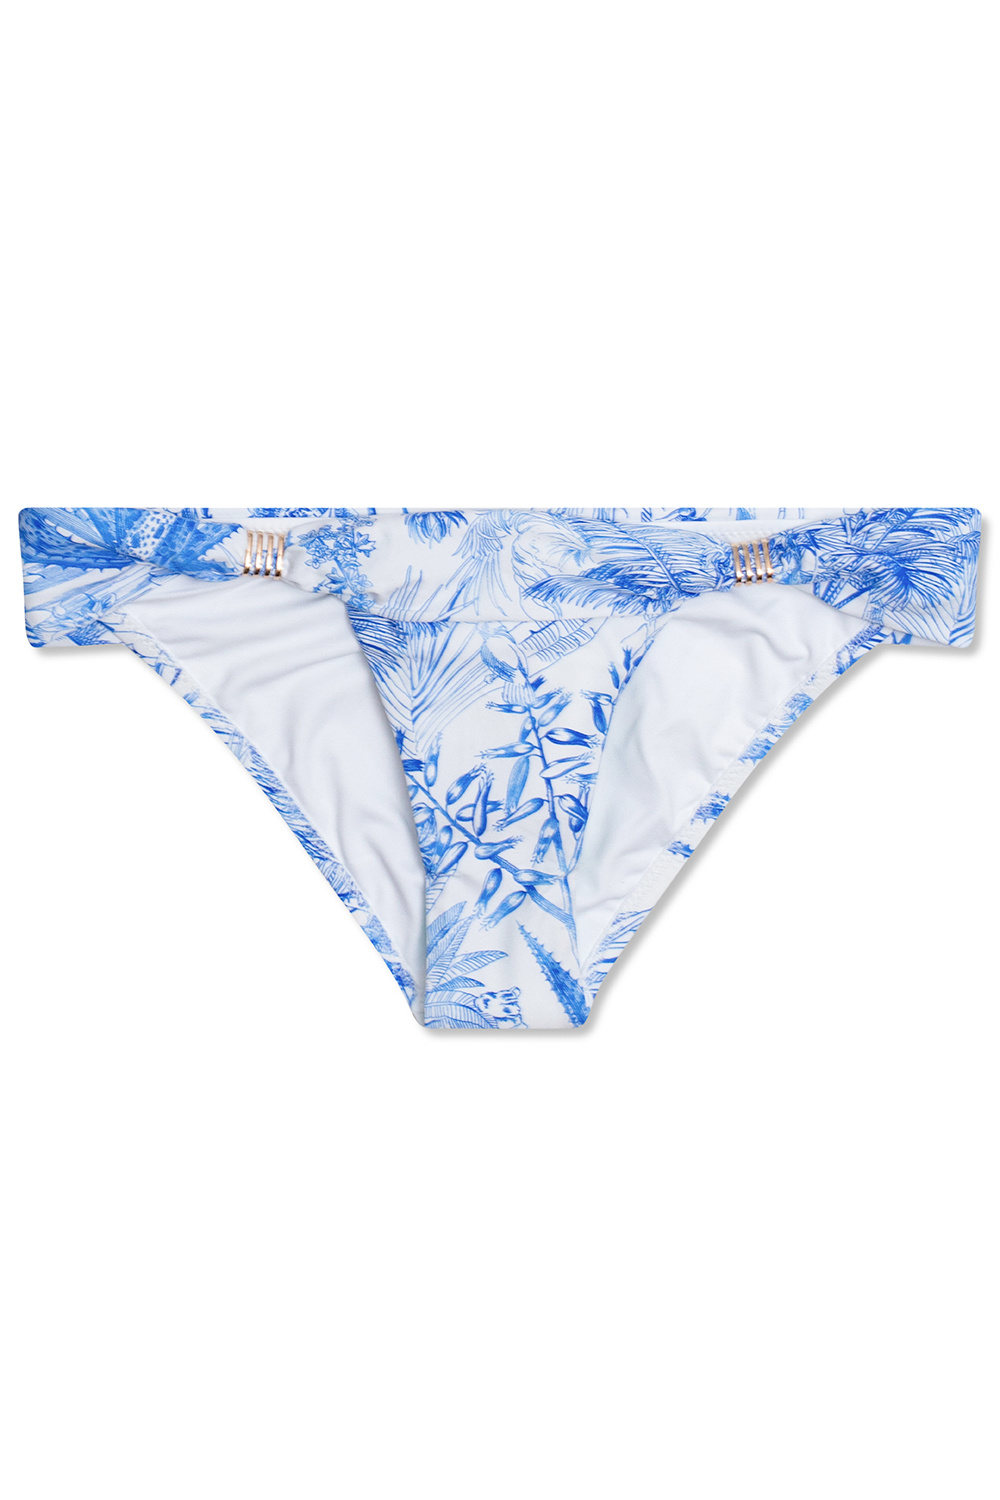 Melissa Odabash ‘Grenada’ swimsuit bottom